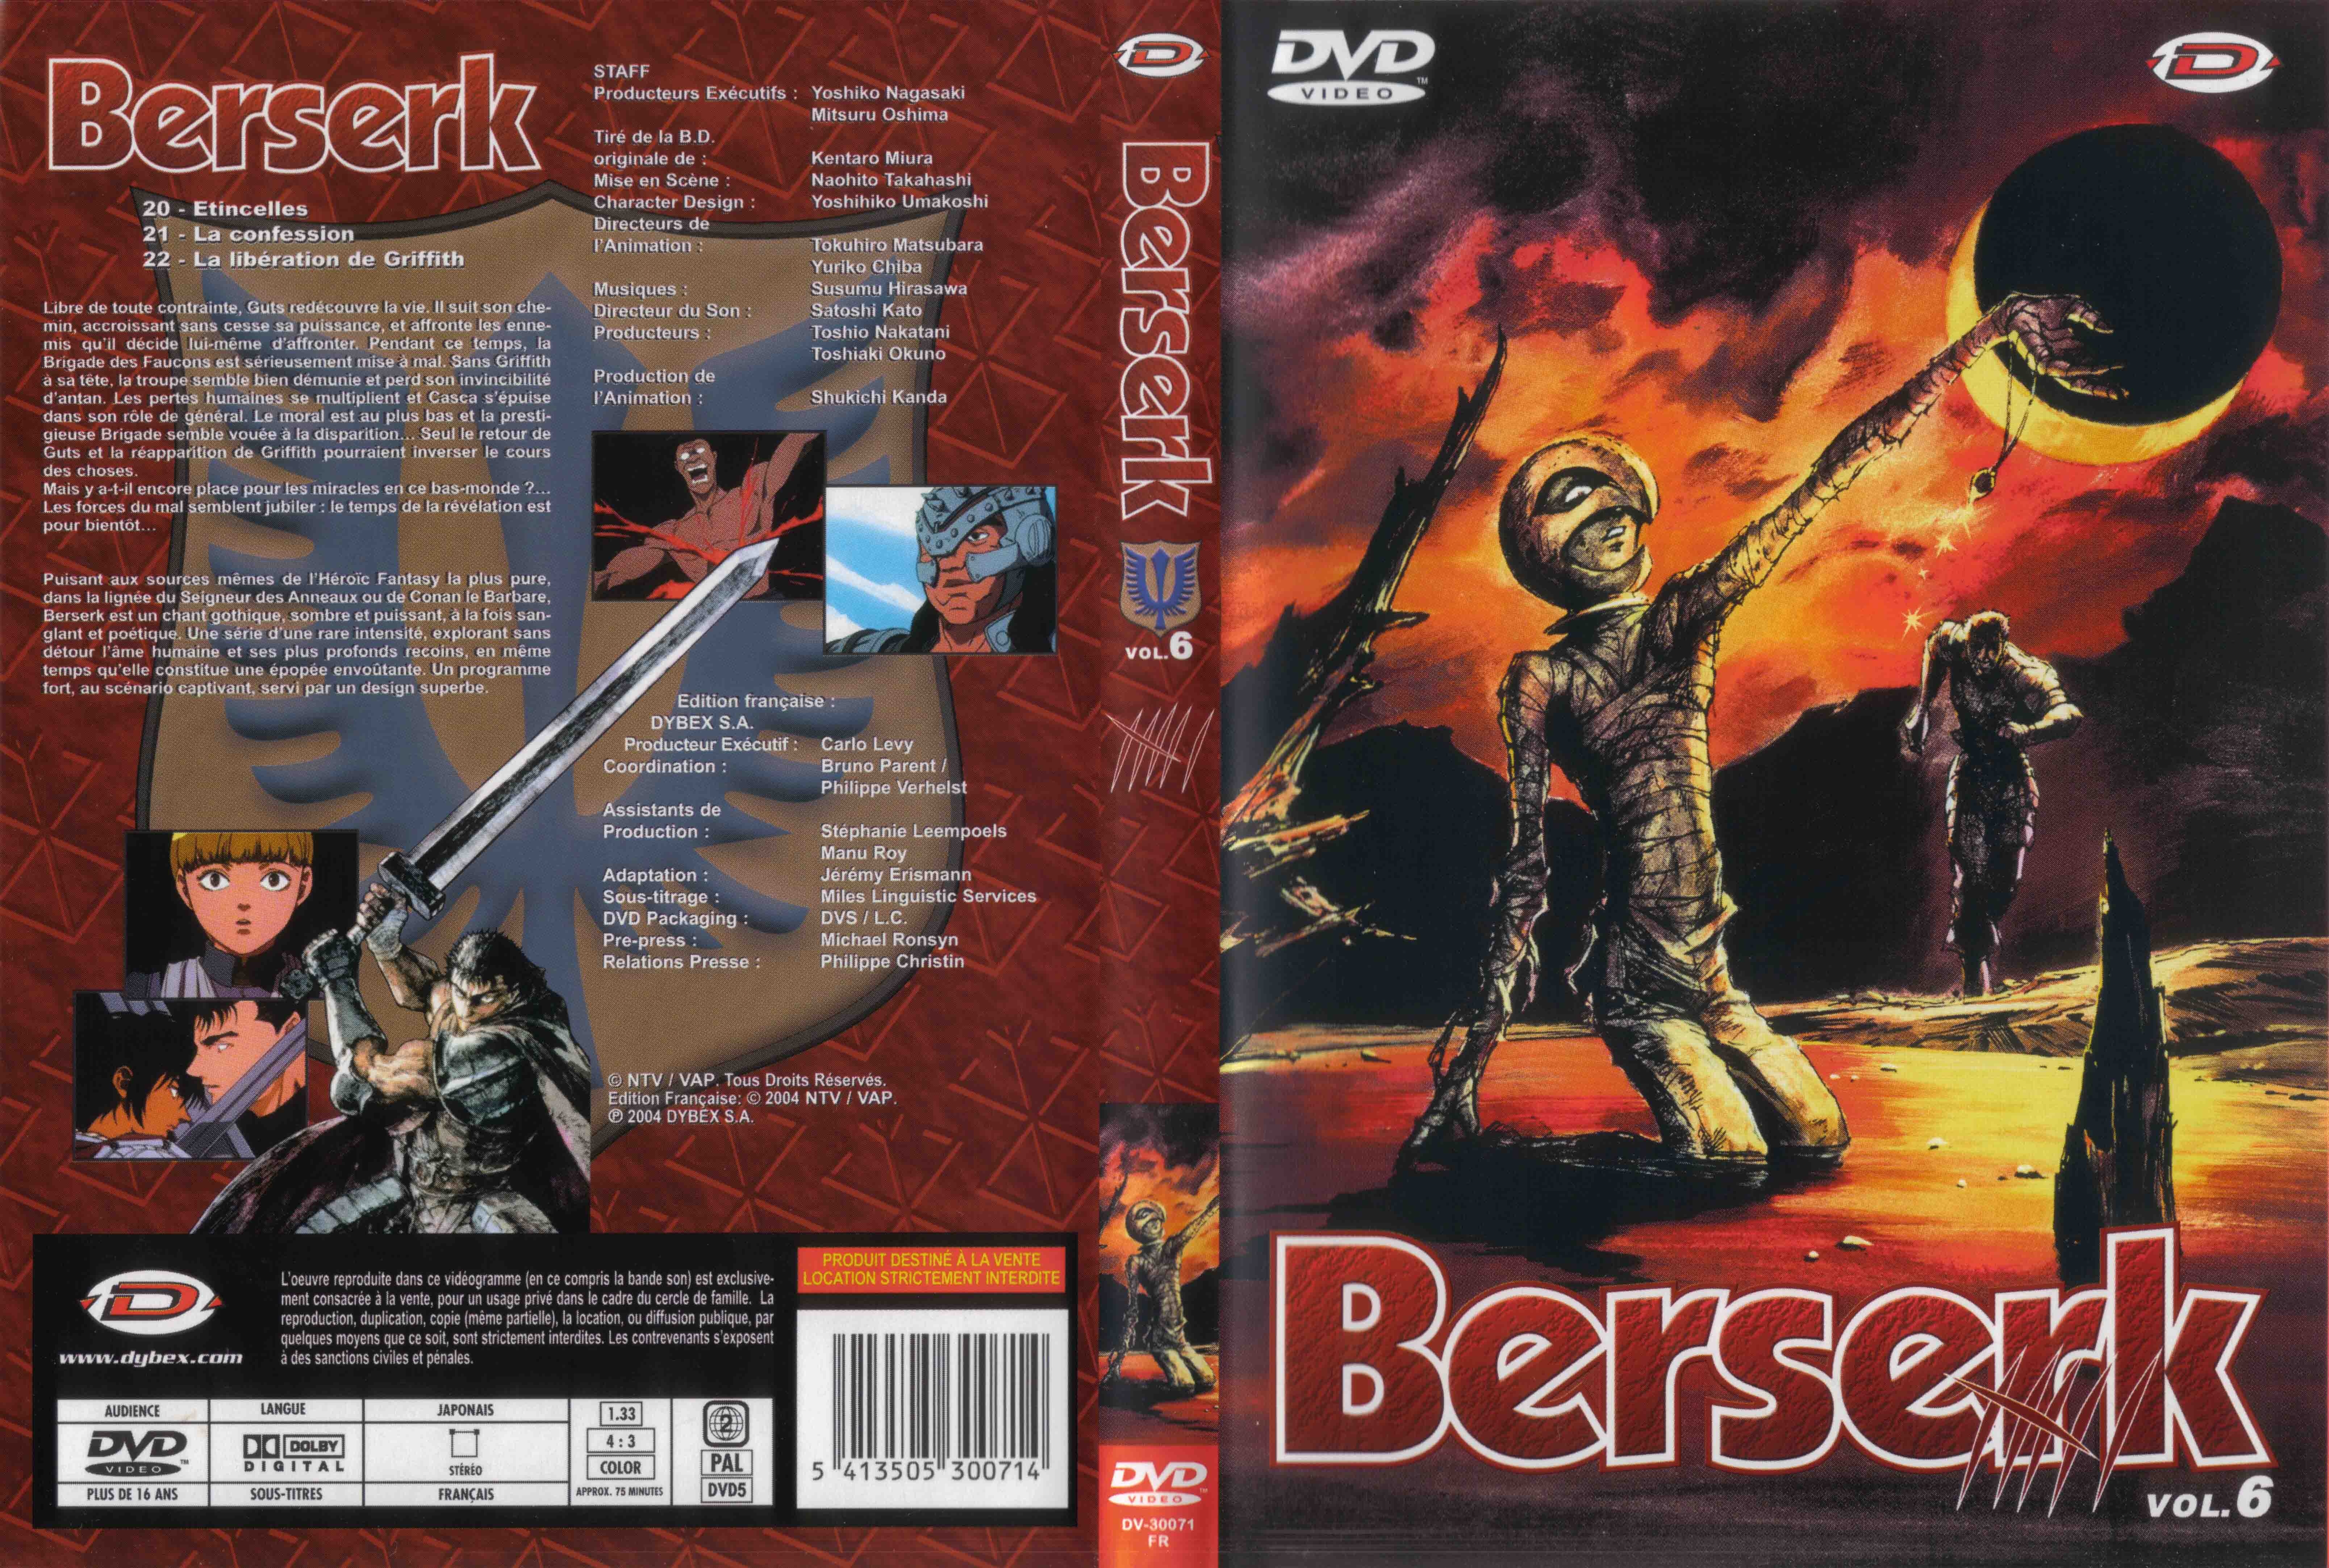 Jaquette DVD Berserk vol 6